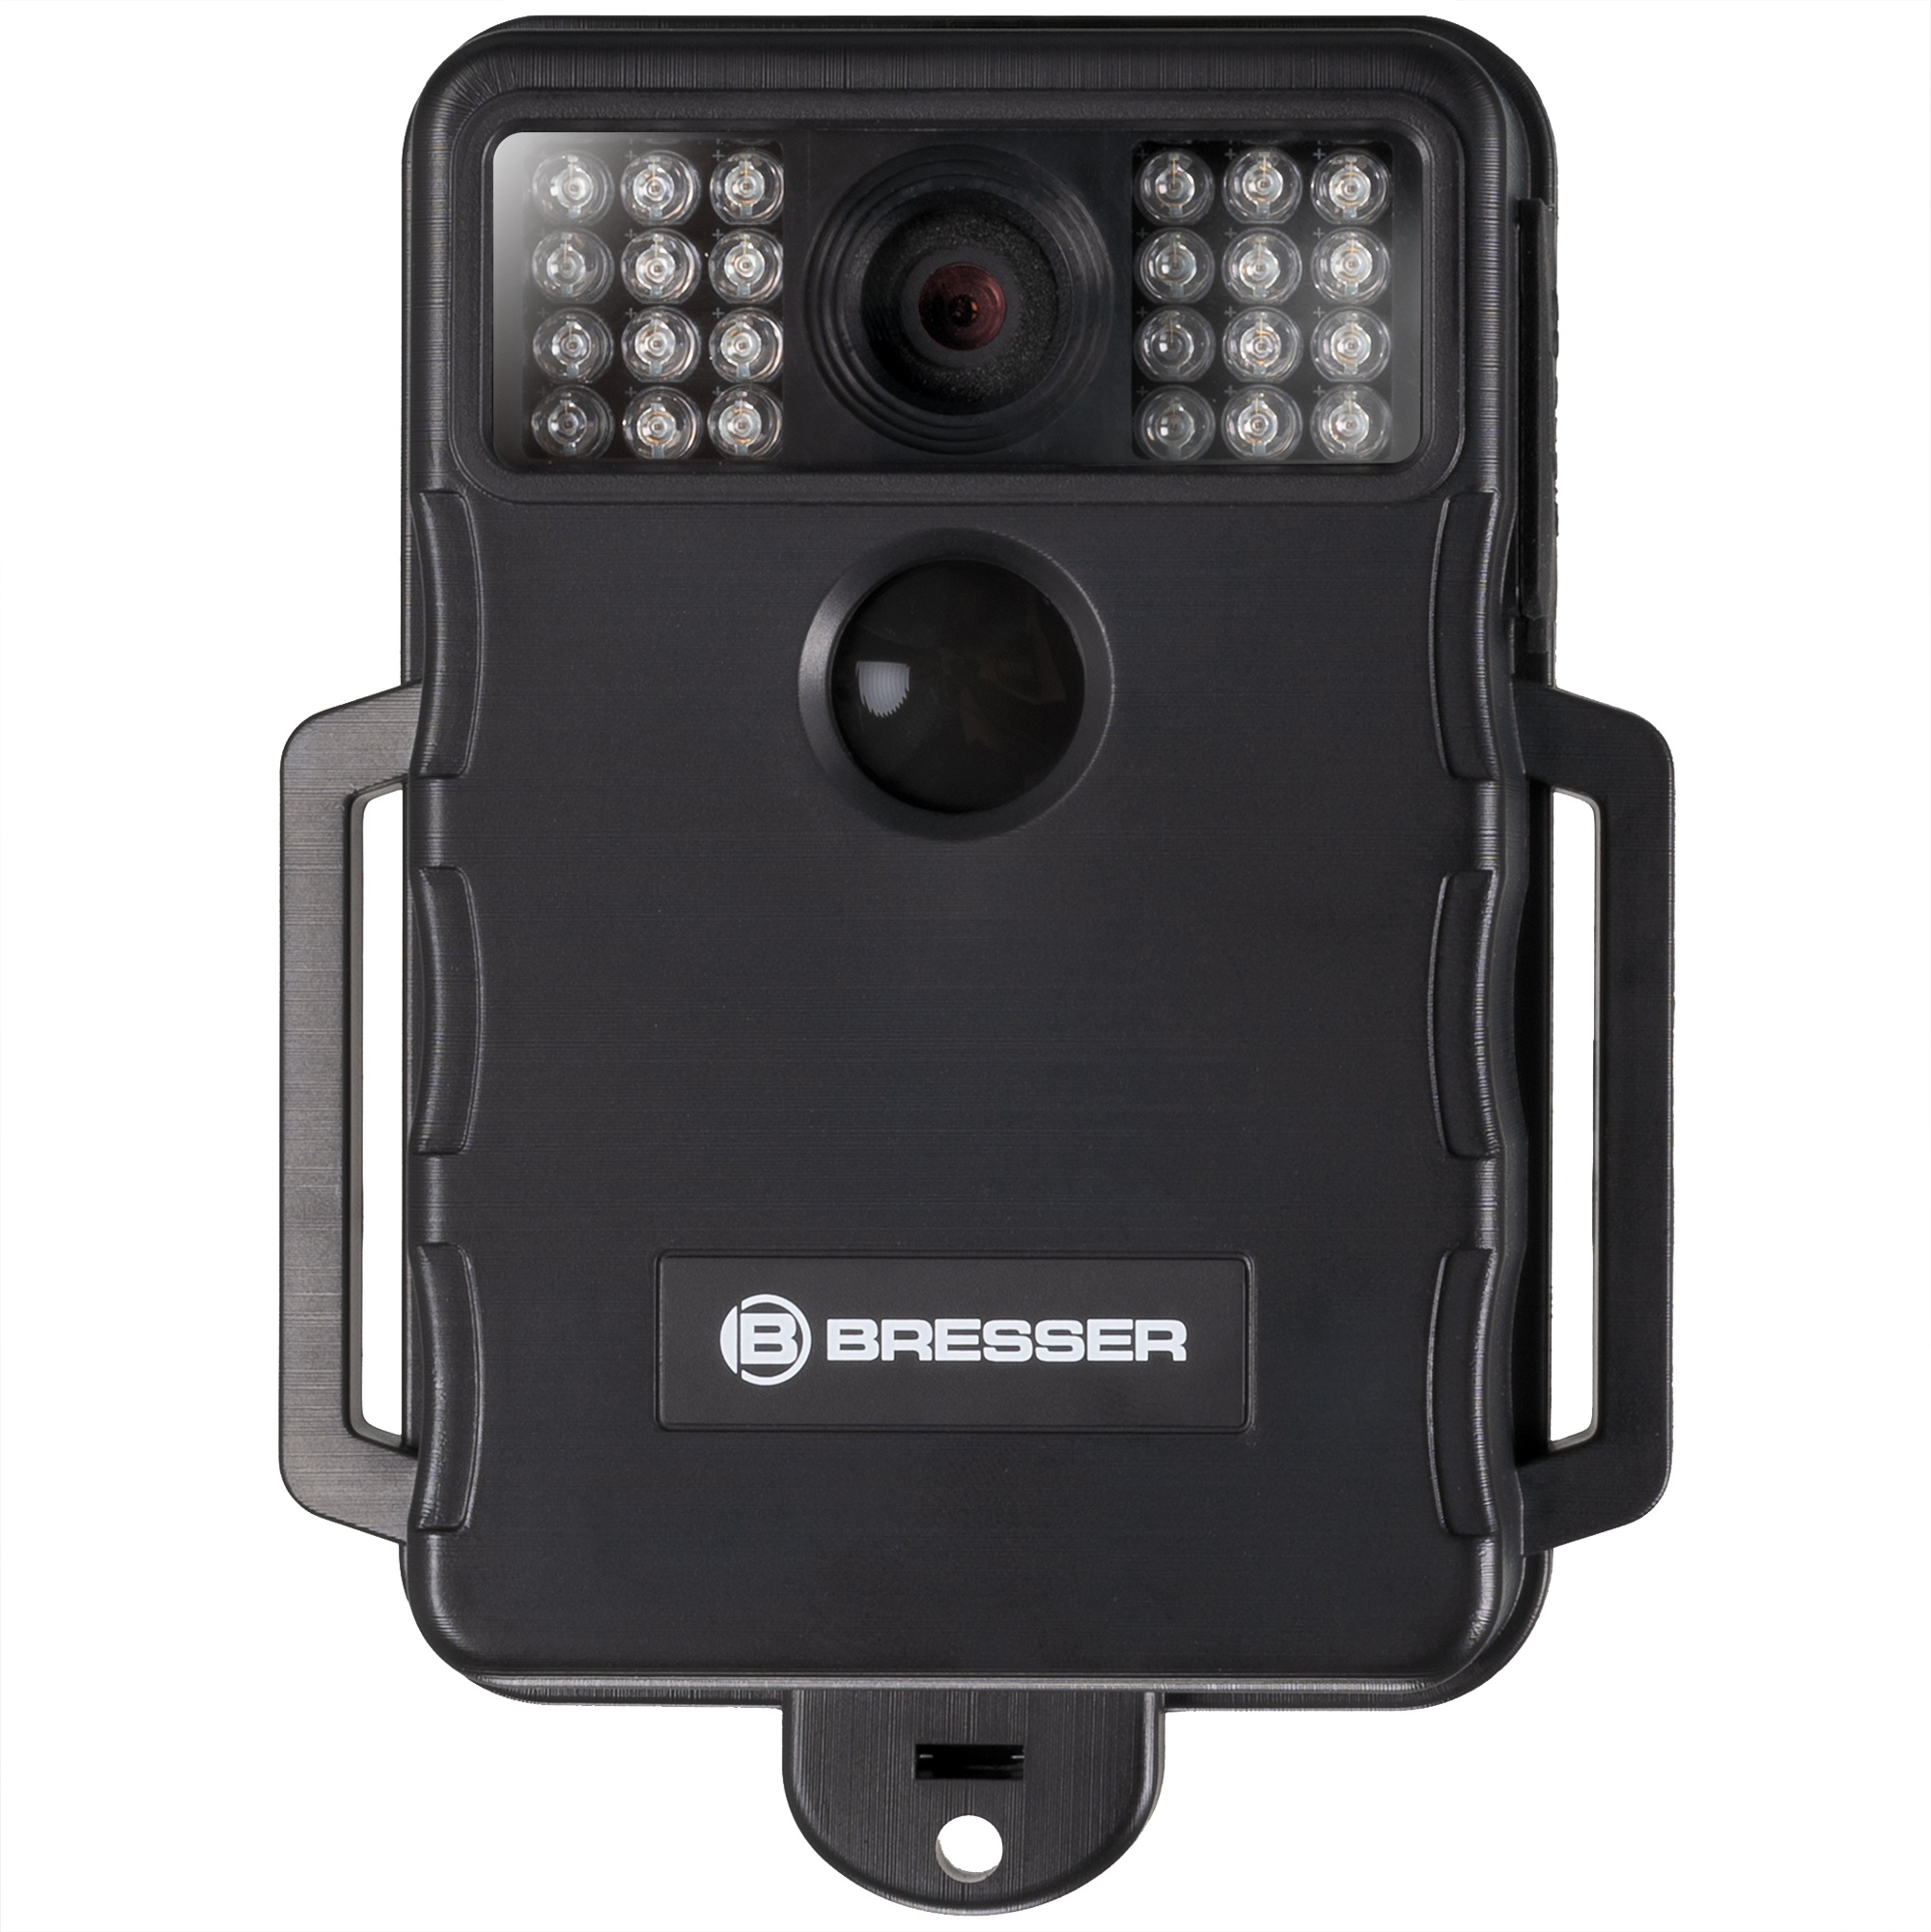 BRESSER Wildkamera 5 MP Full-HD mit PIR-Bewegungssensor